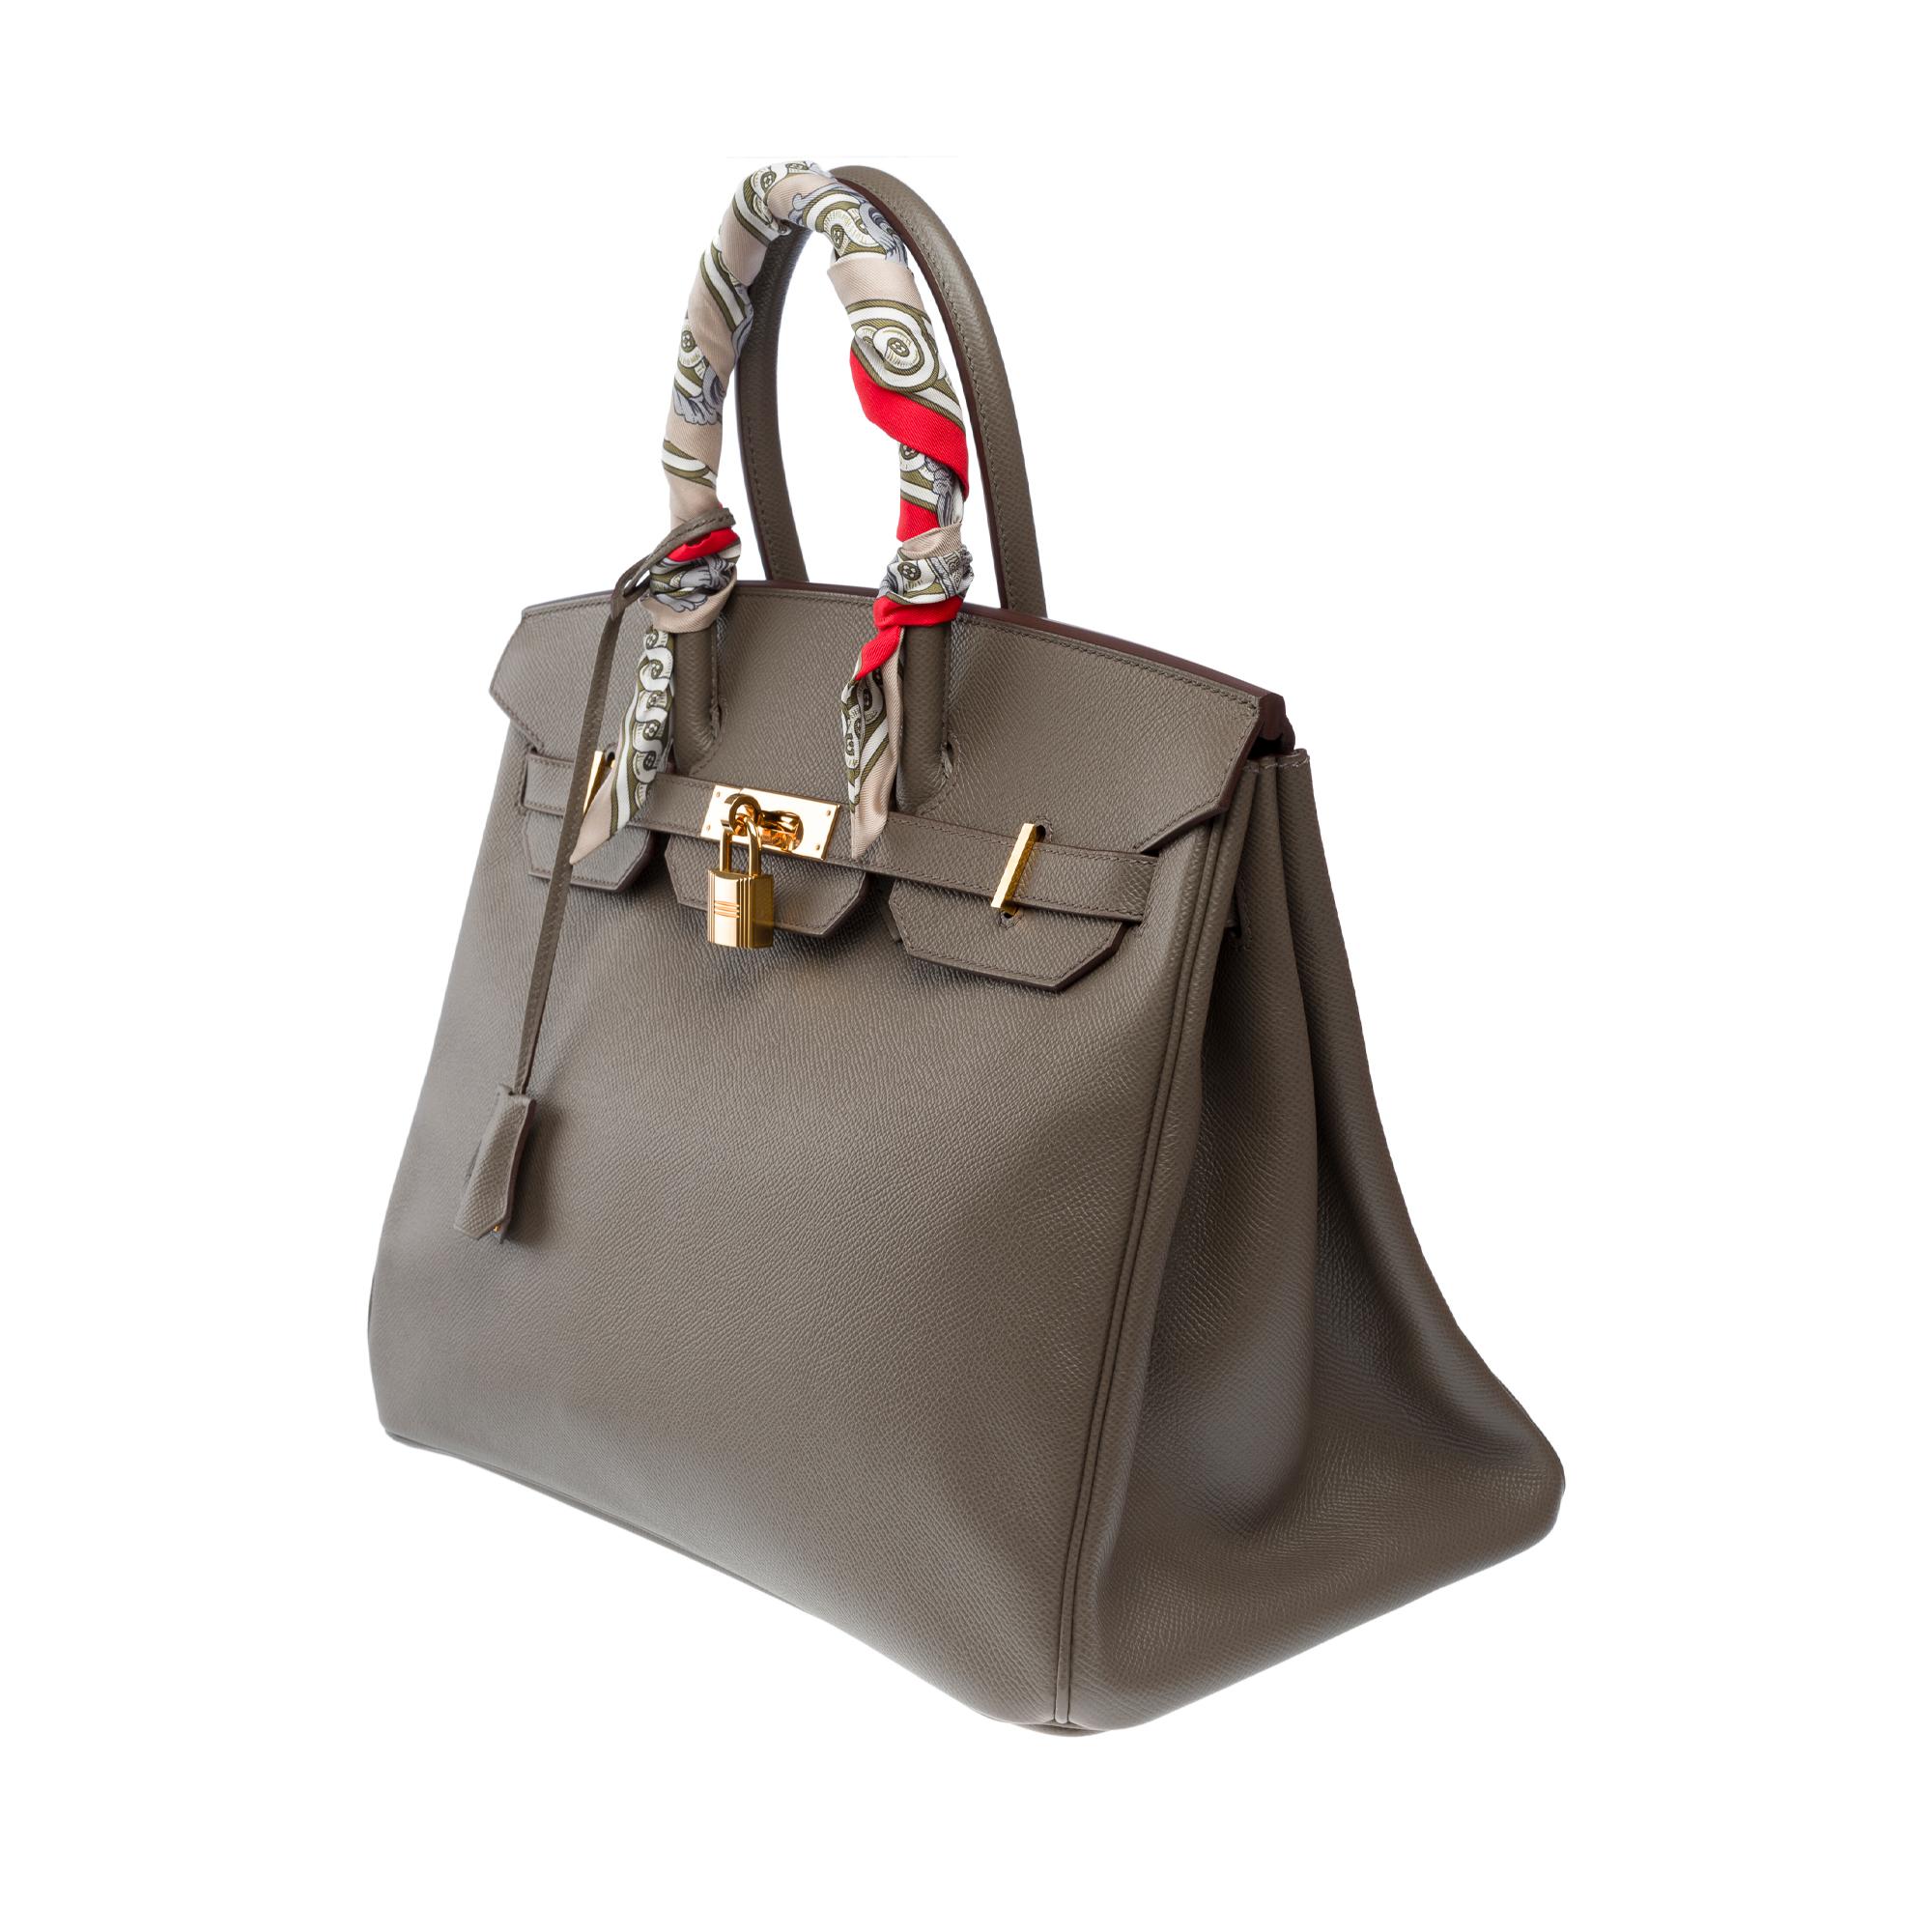 Stunning Hermès Birkin 35 handbag in etoupe Epsom leather, RGHW For Sale 1